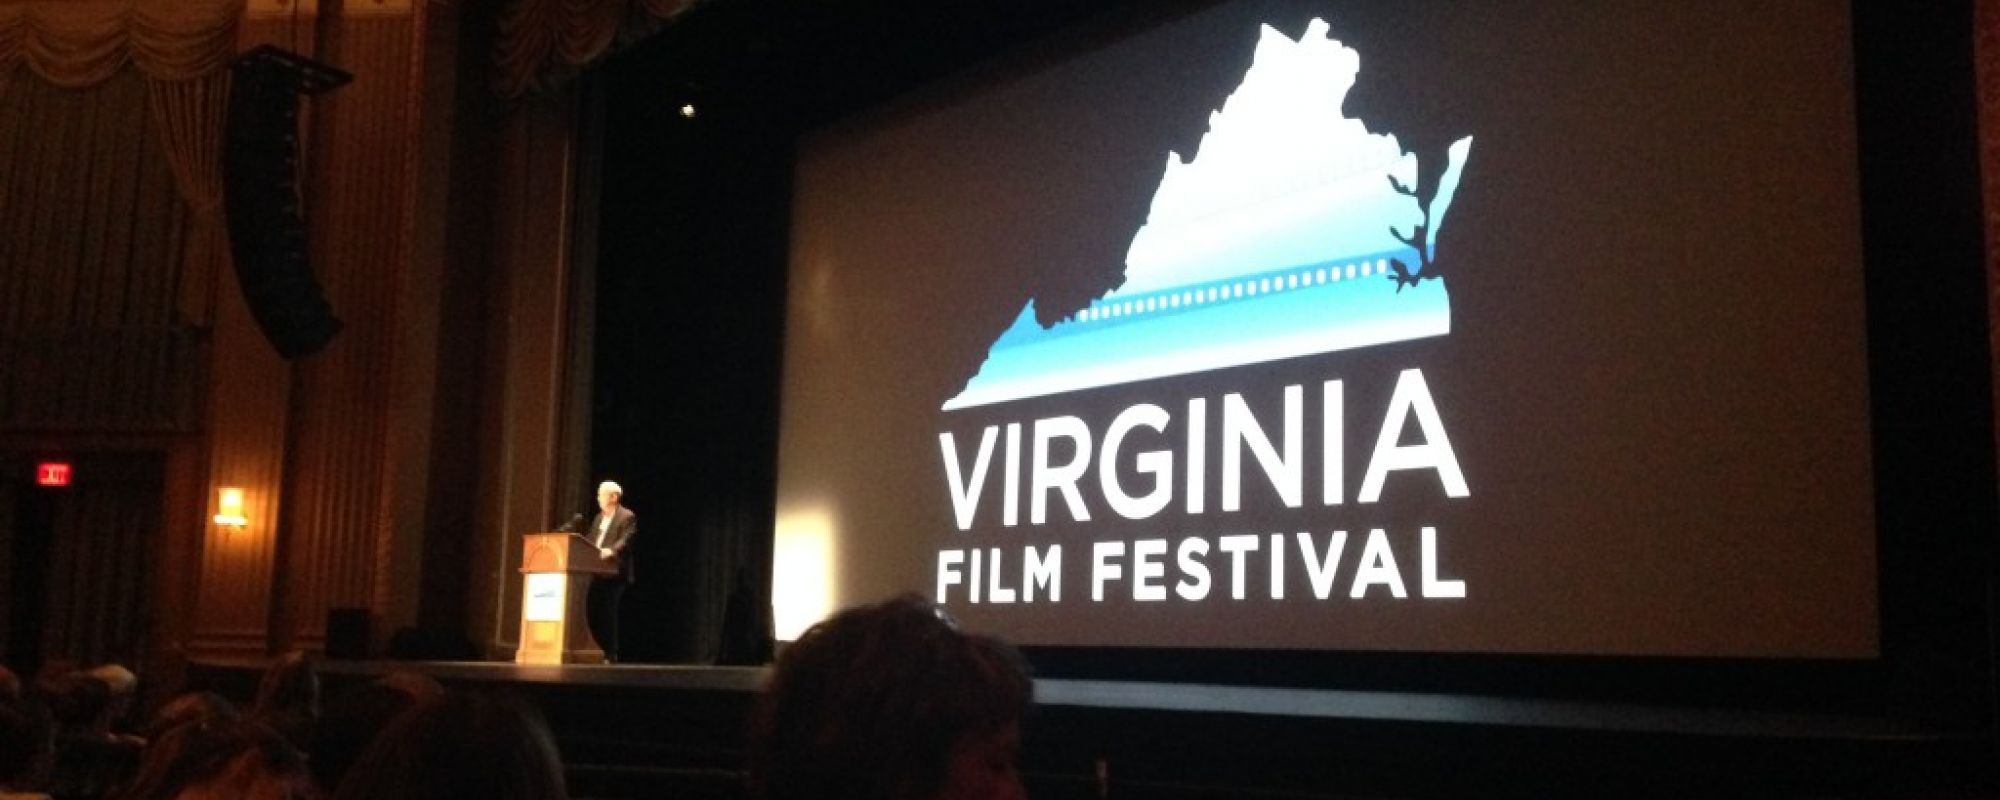 Virginia Film Festival at the Paramount